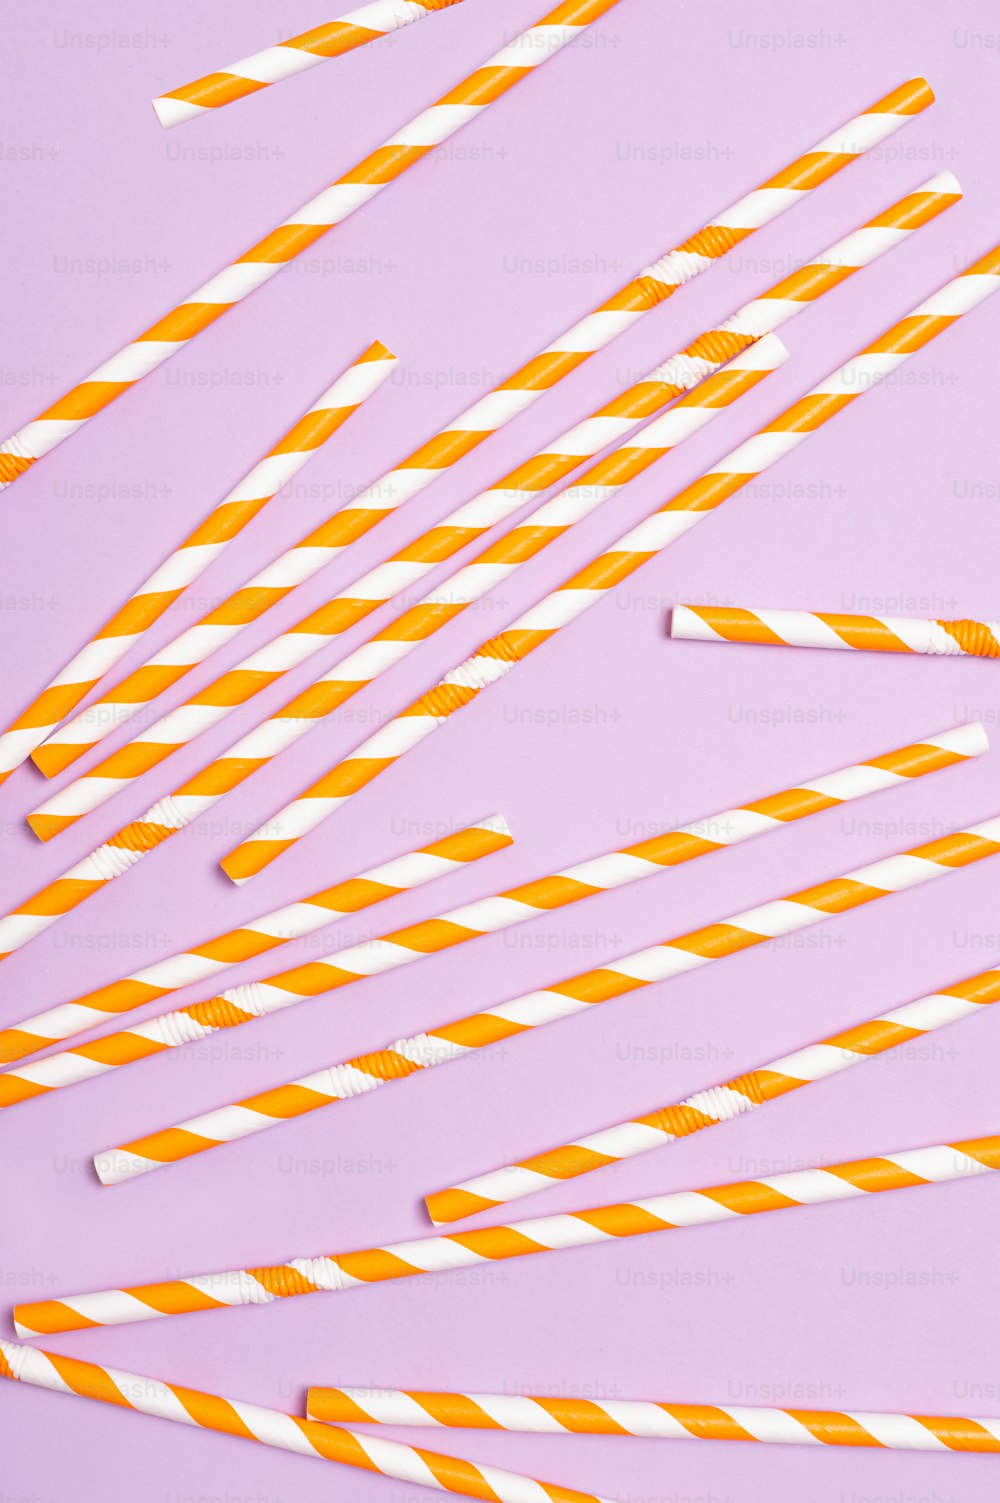 Pajitas de papel a rayas naranjas y blancas sobre un fondo púrpura